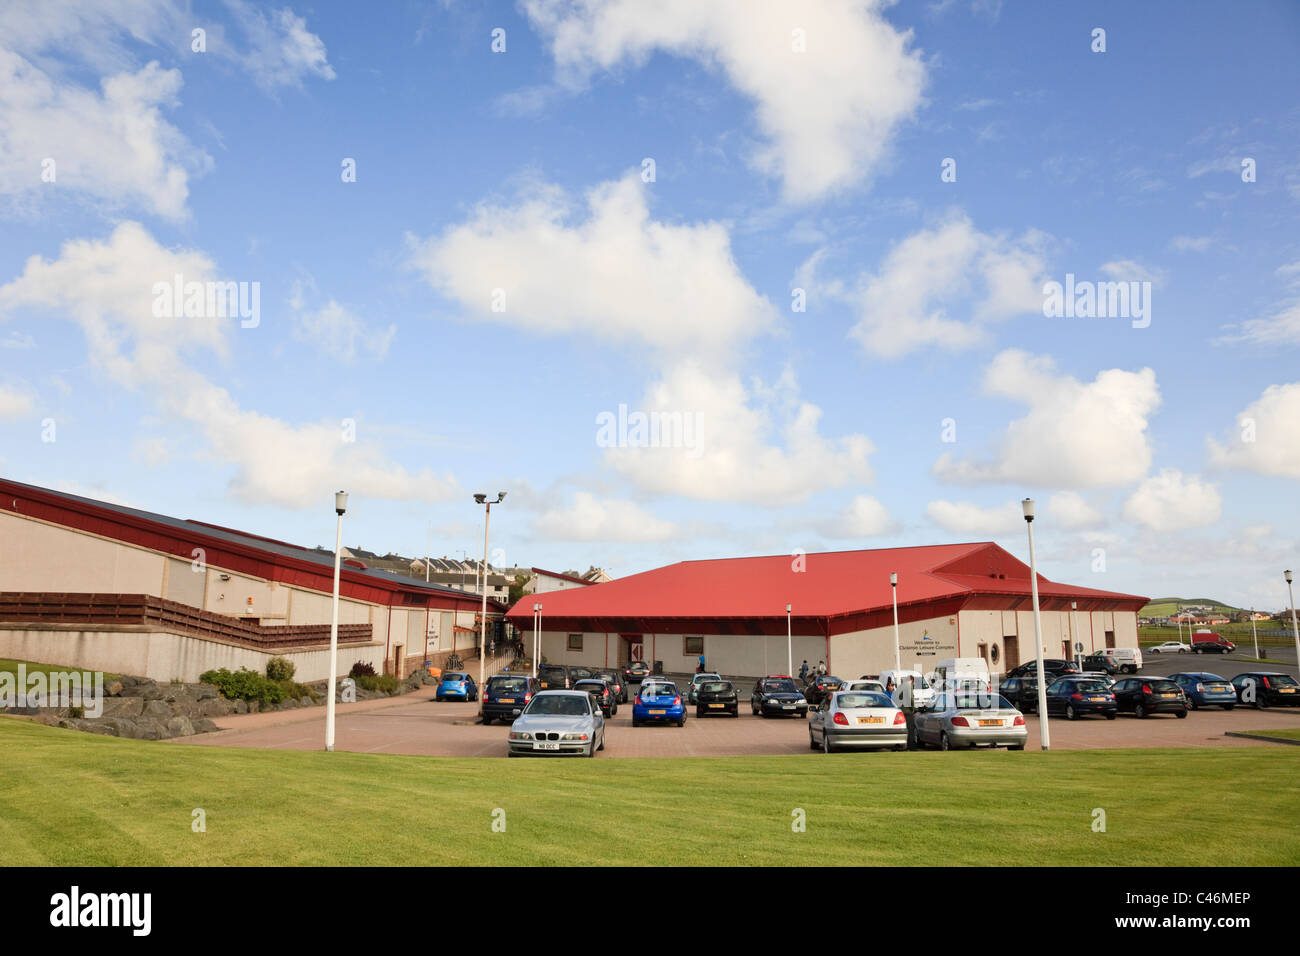 New Clickimin Leisure Complex sports centre building in Lerwick, Shetland Islands, Scotland, UK, Britain. Stock Photo